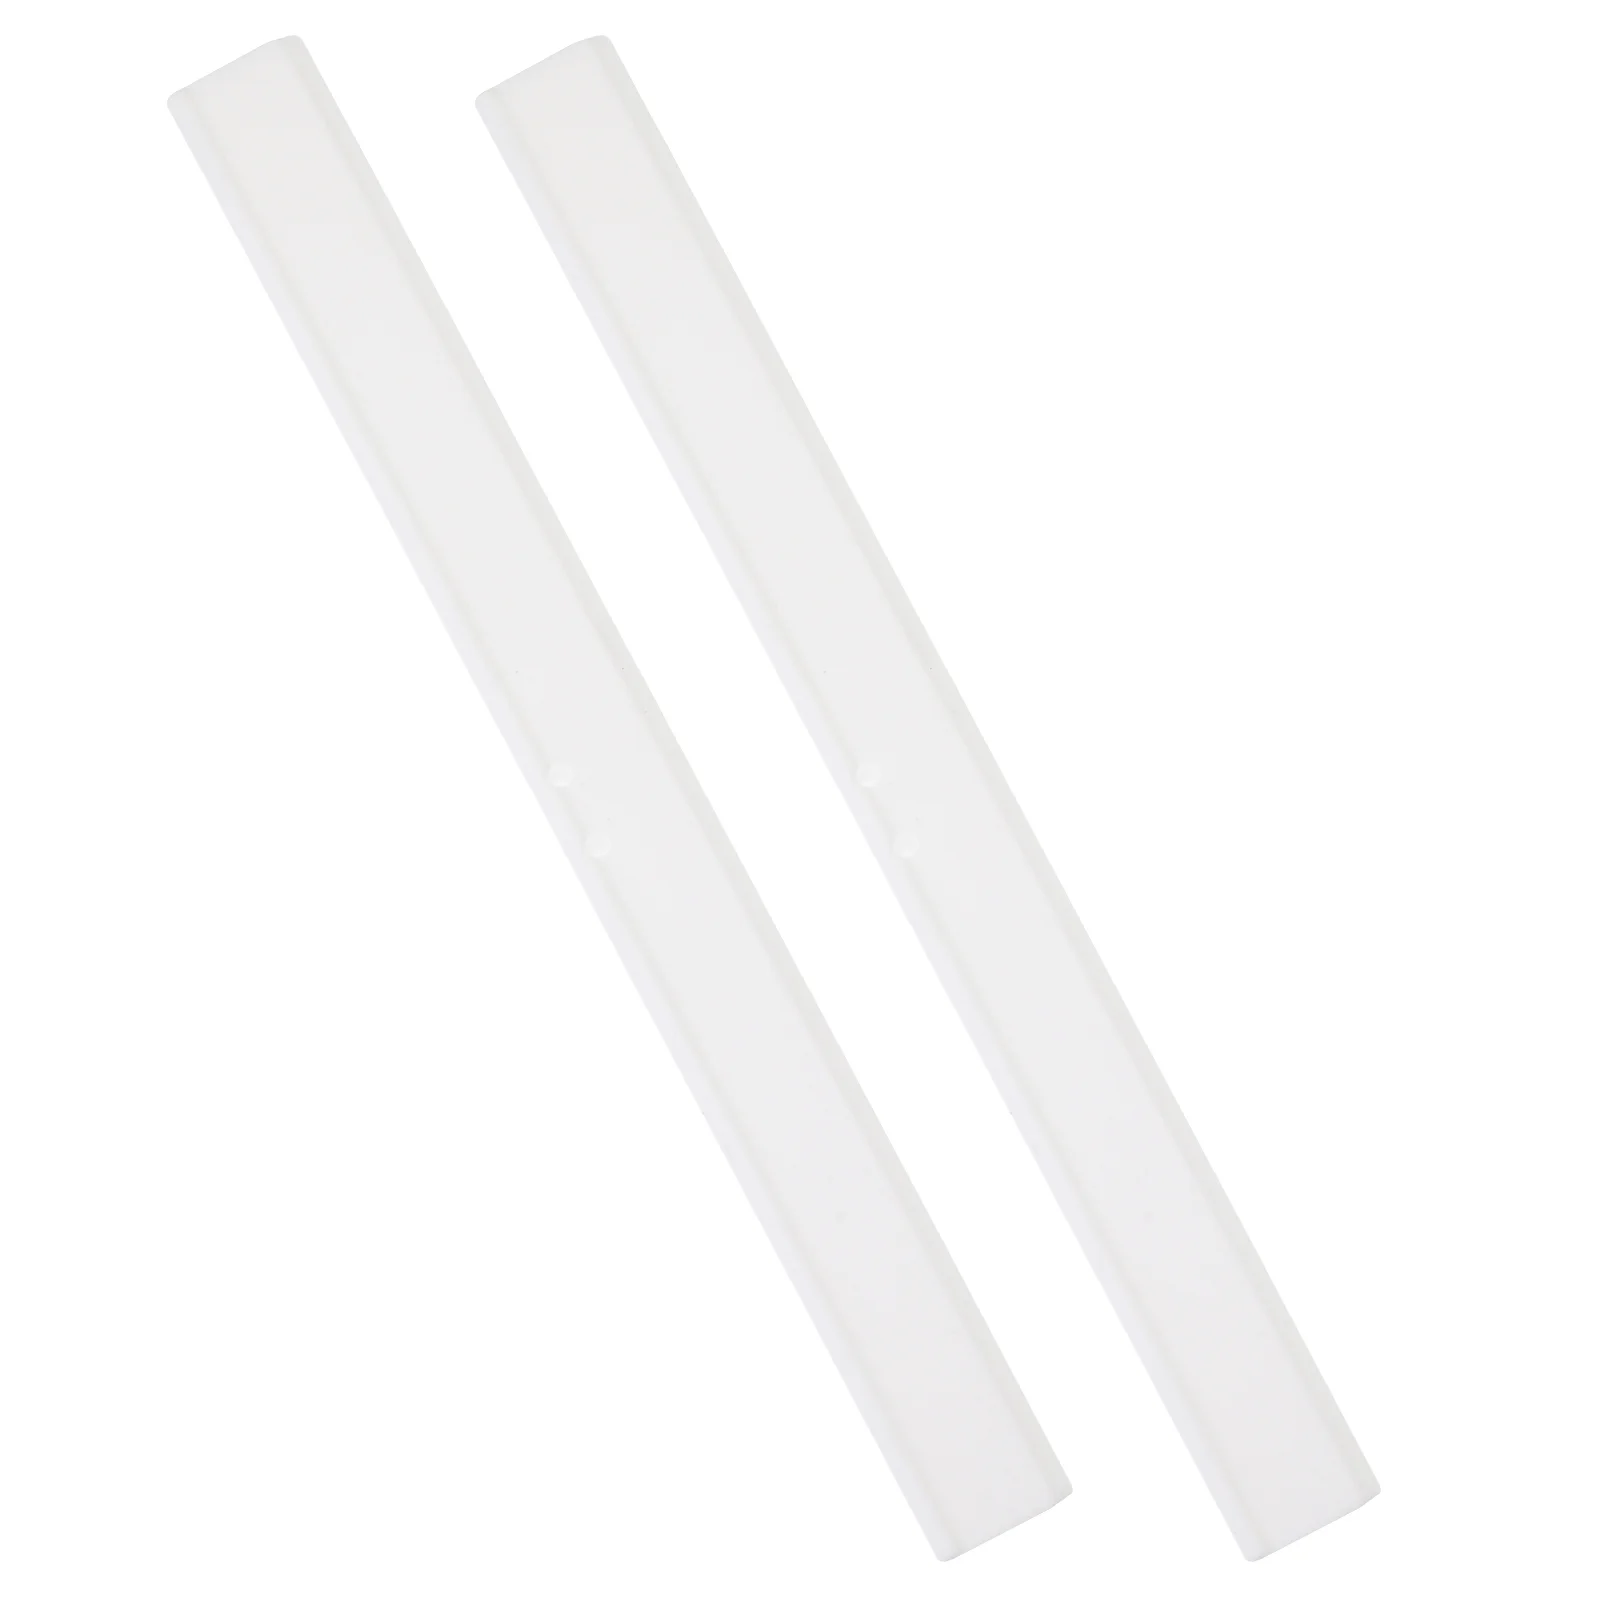 

2 Pcs Car Accessories Wiper Strip Window Squeegee Rubber Replacement Scraper Blades White Shower Refill